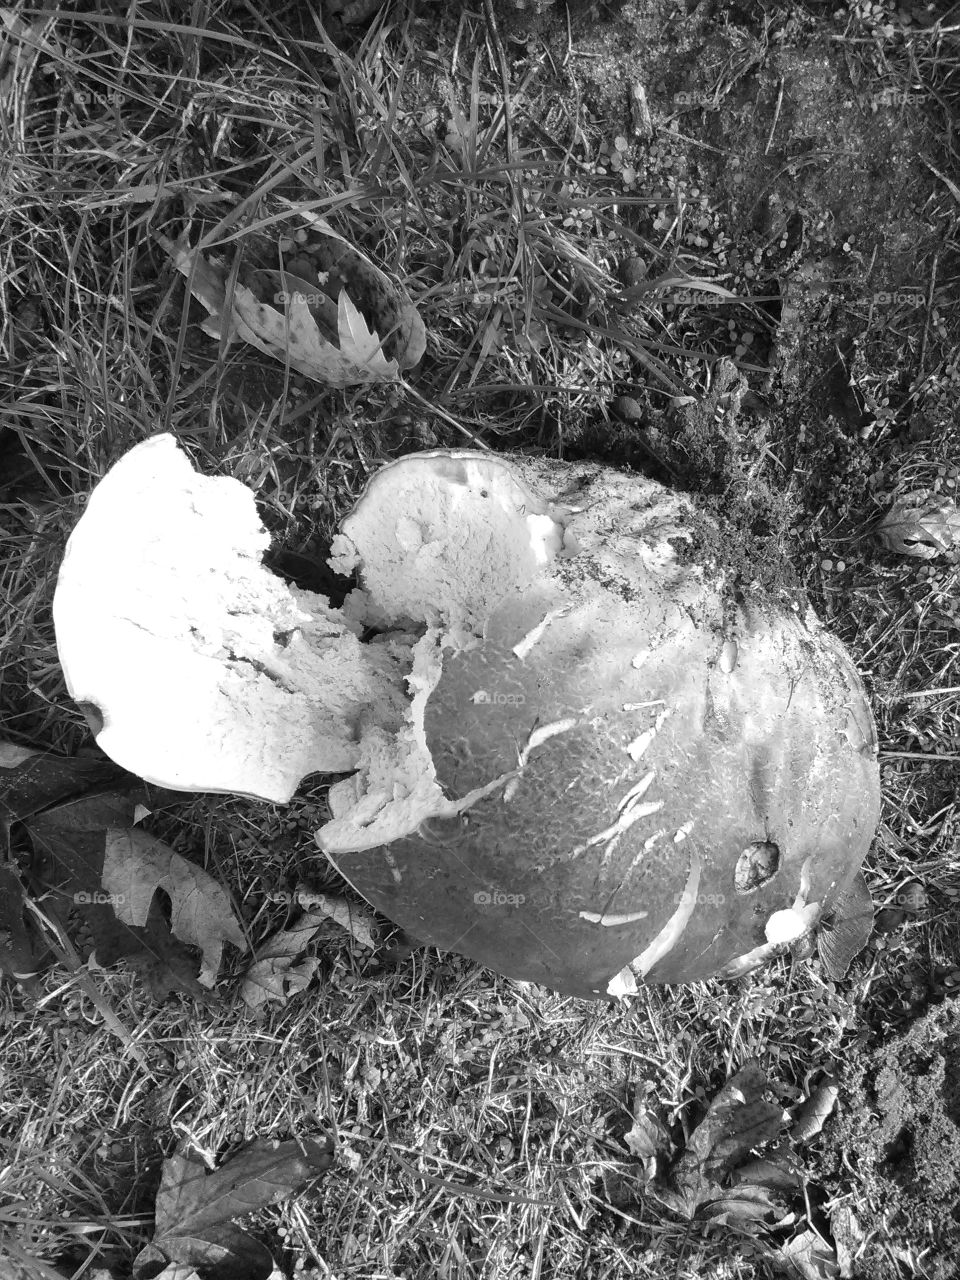 medium size brown puffball mushroom fungi picked!